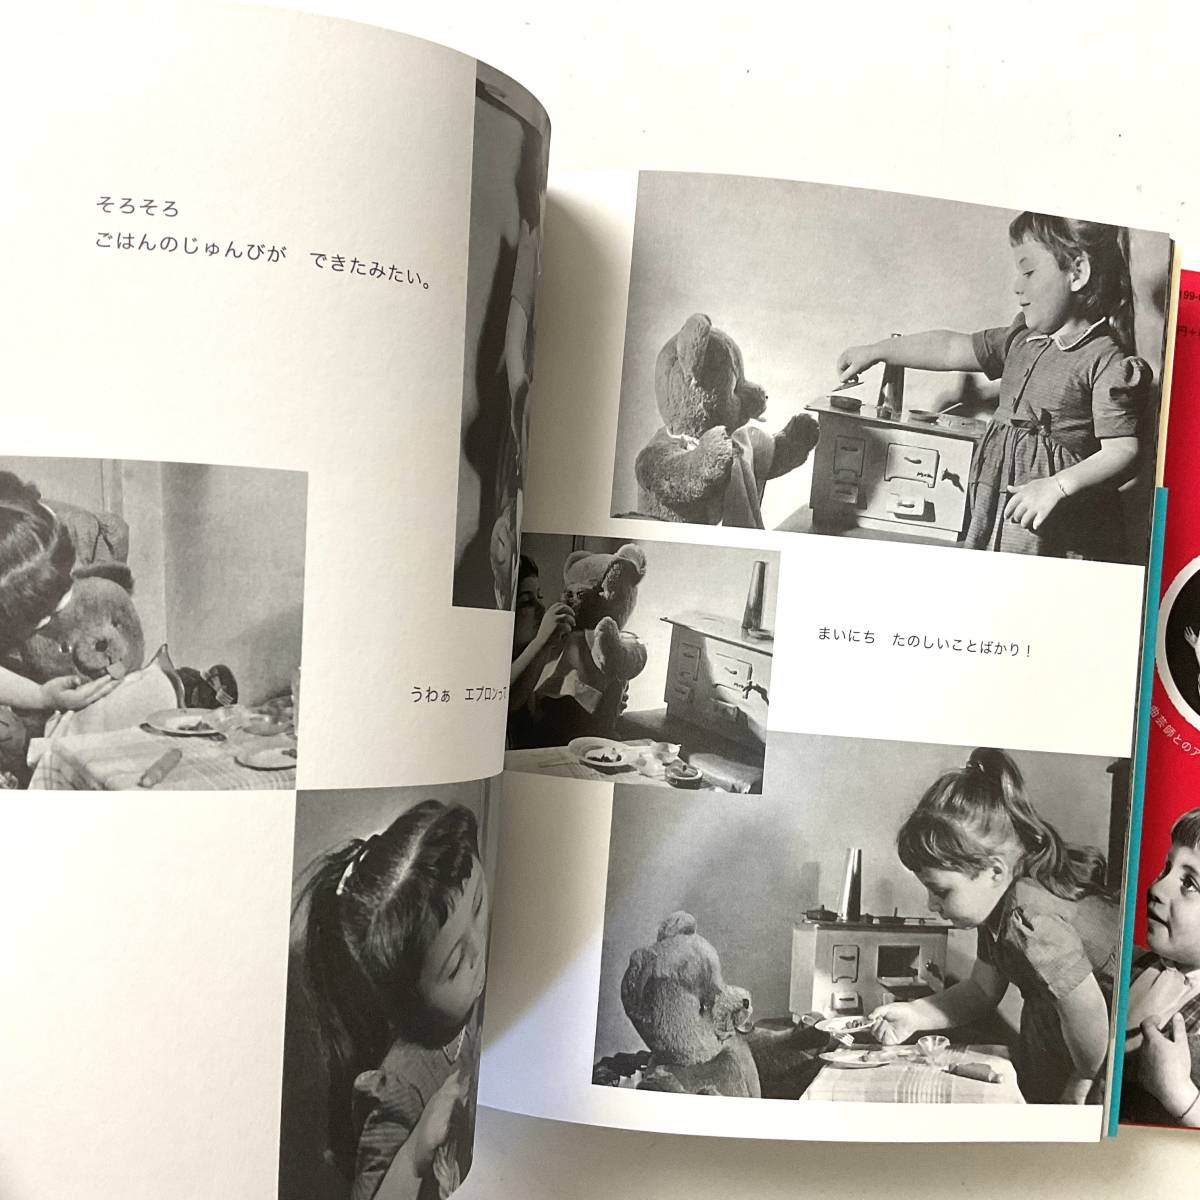  фотография книга с картинками n-n-.f Lawrence n-n- цирк ... прекрасный книга@2 шт. комплект 2860 иен трудно найти редкость 